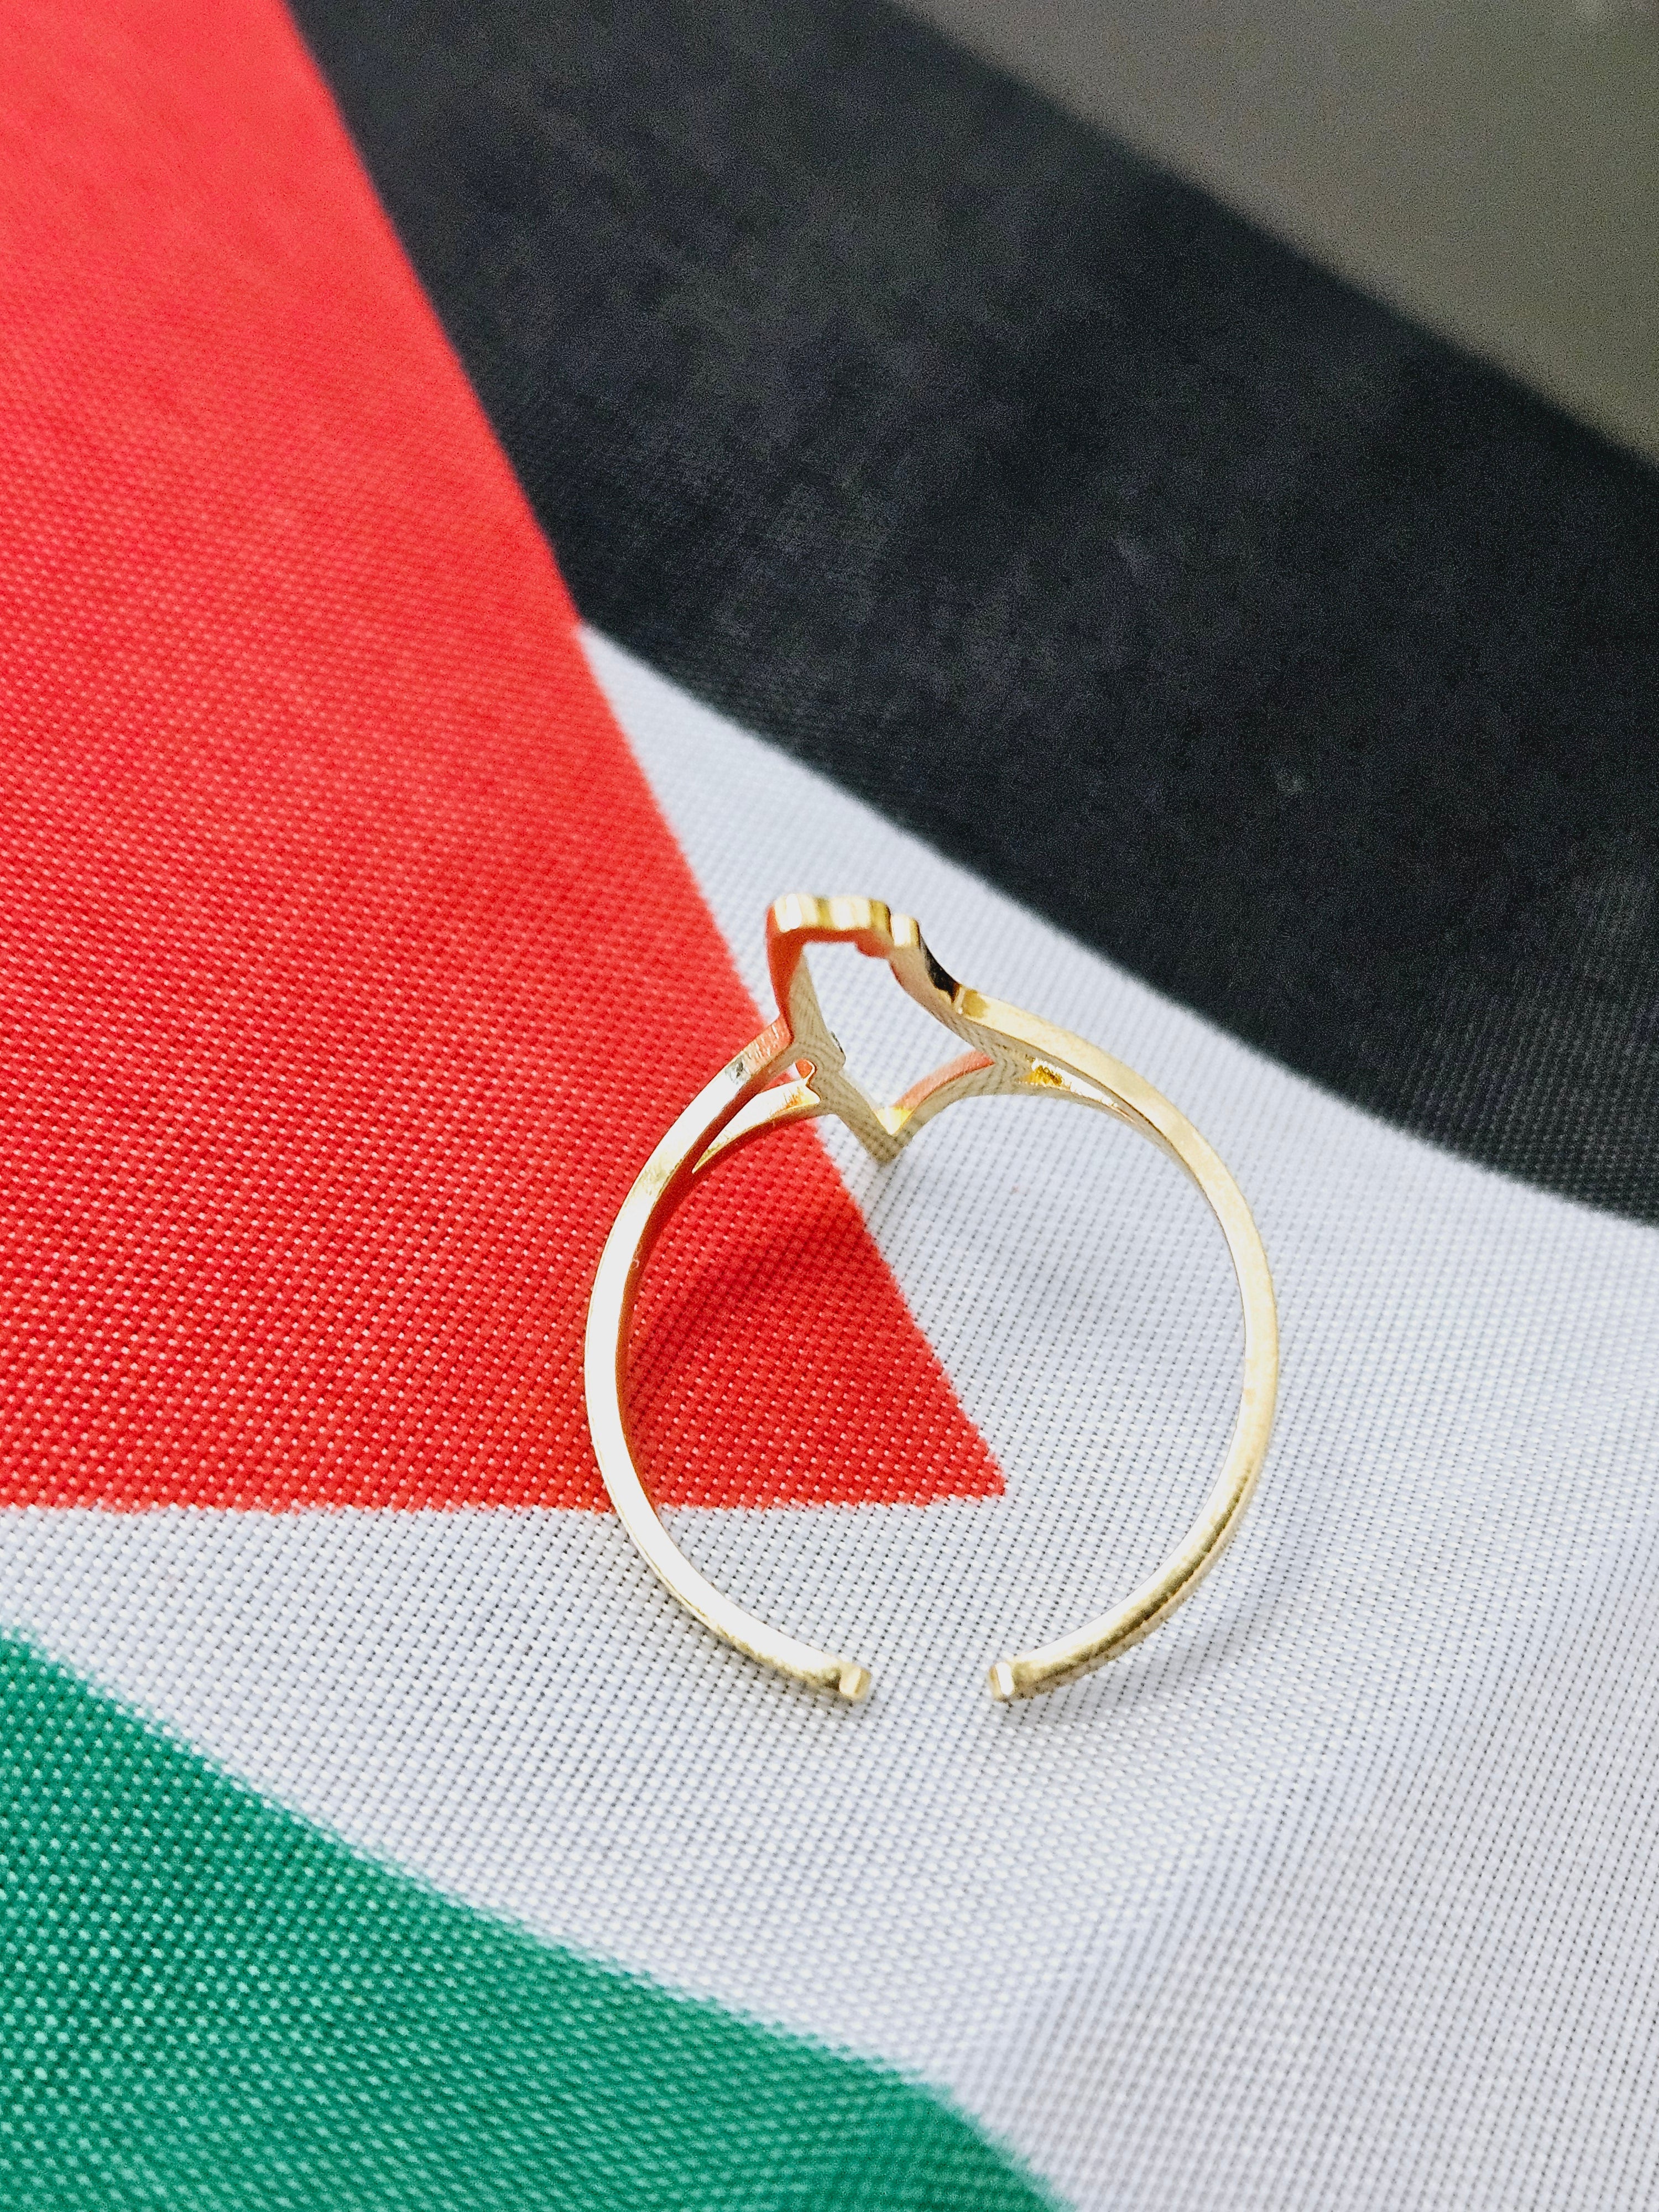 Palestine Hollow Ring Adjustable Size - Habibi Heritage